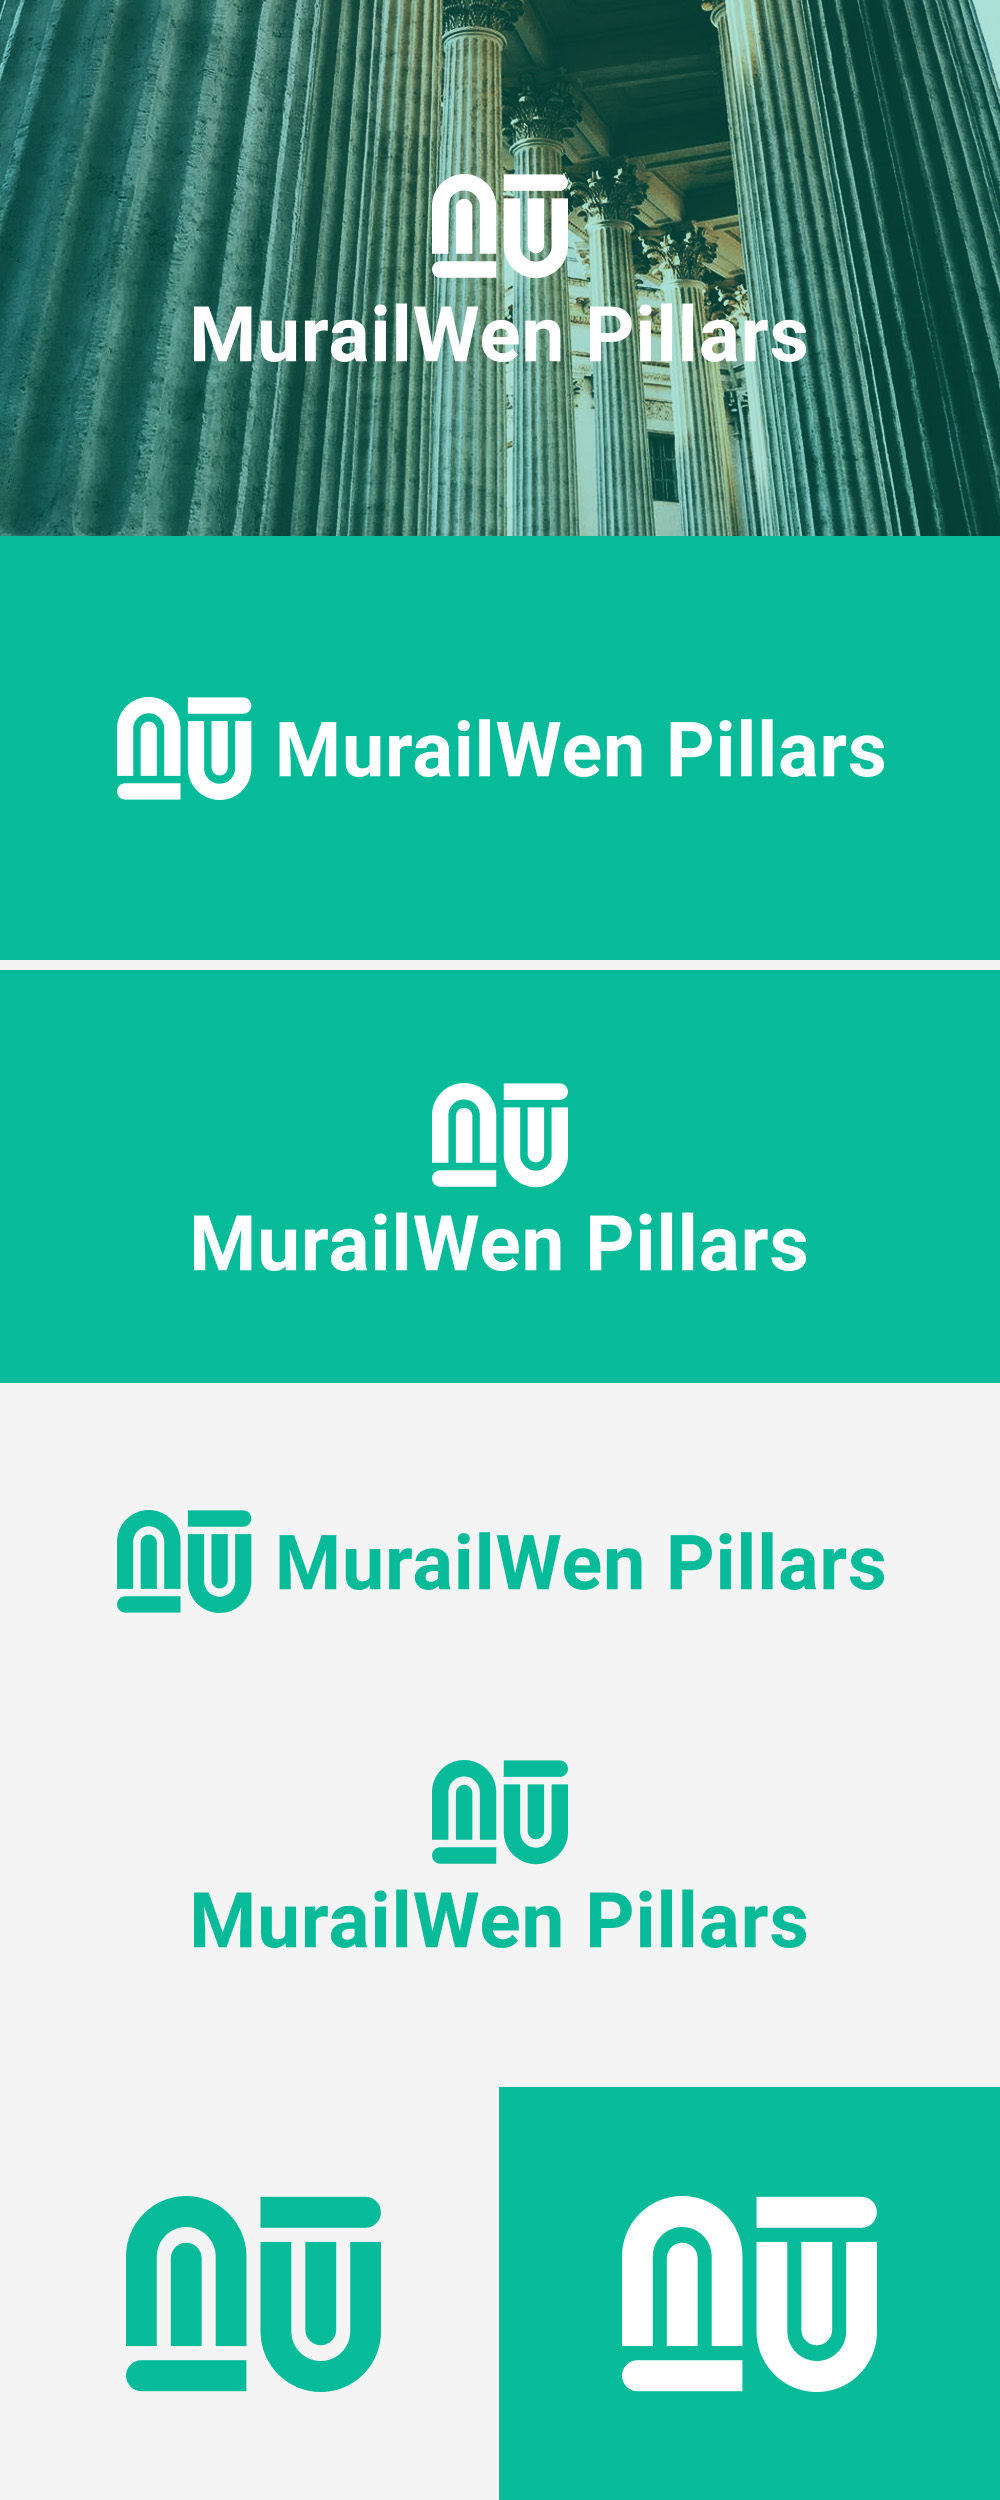 MurailWen Pillars Logo Presentation.jpg